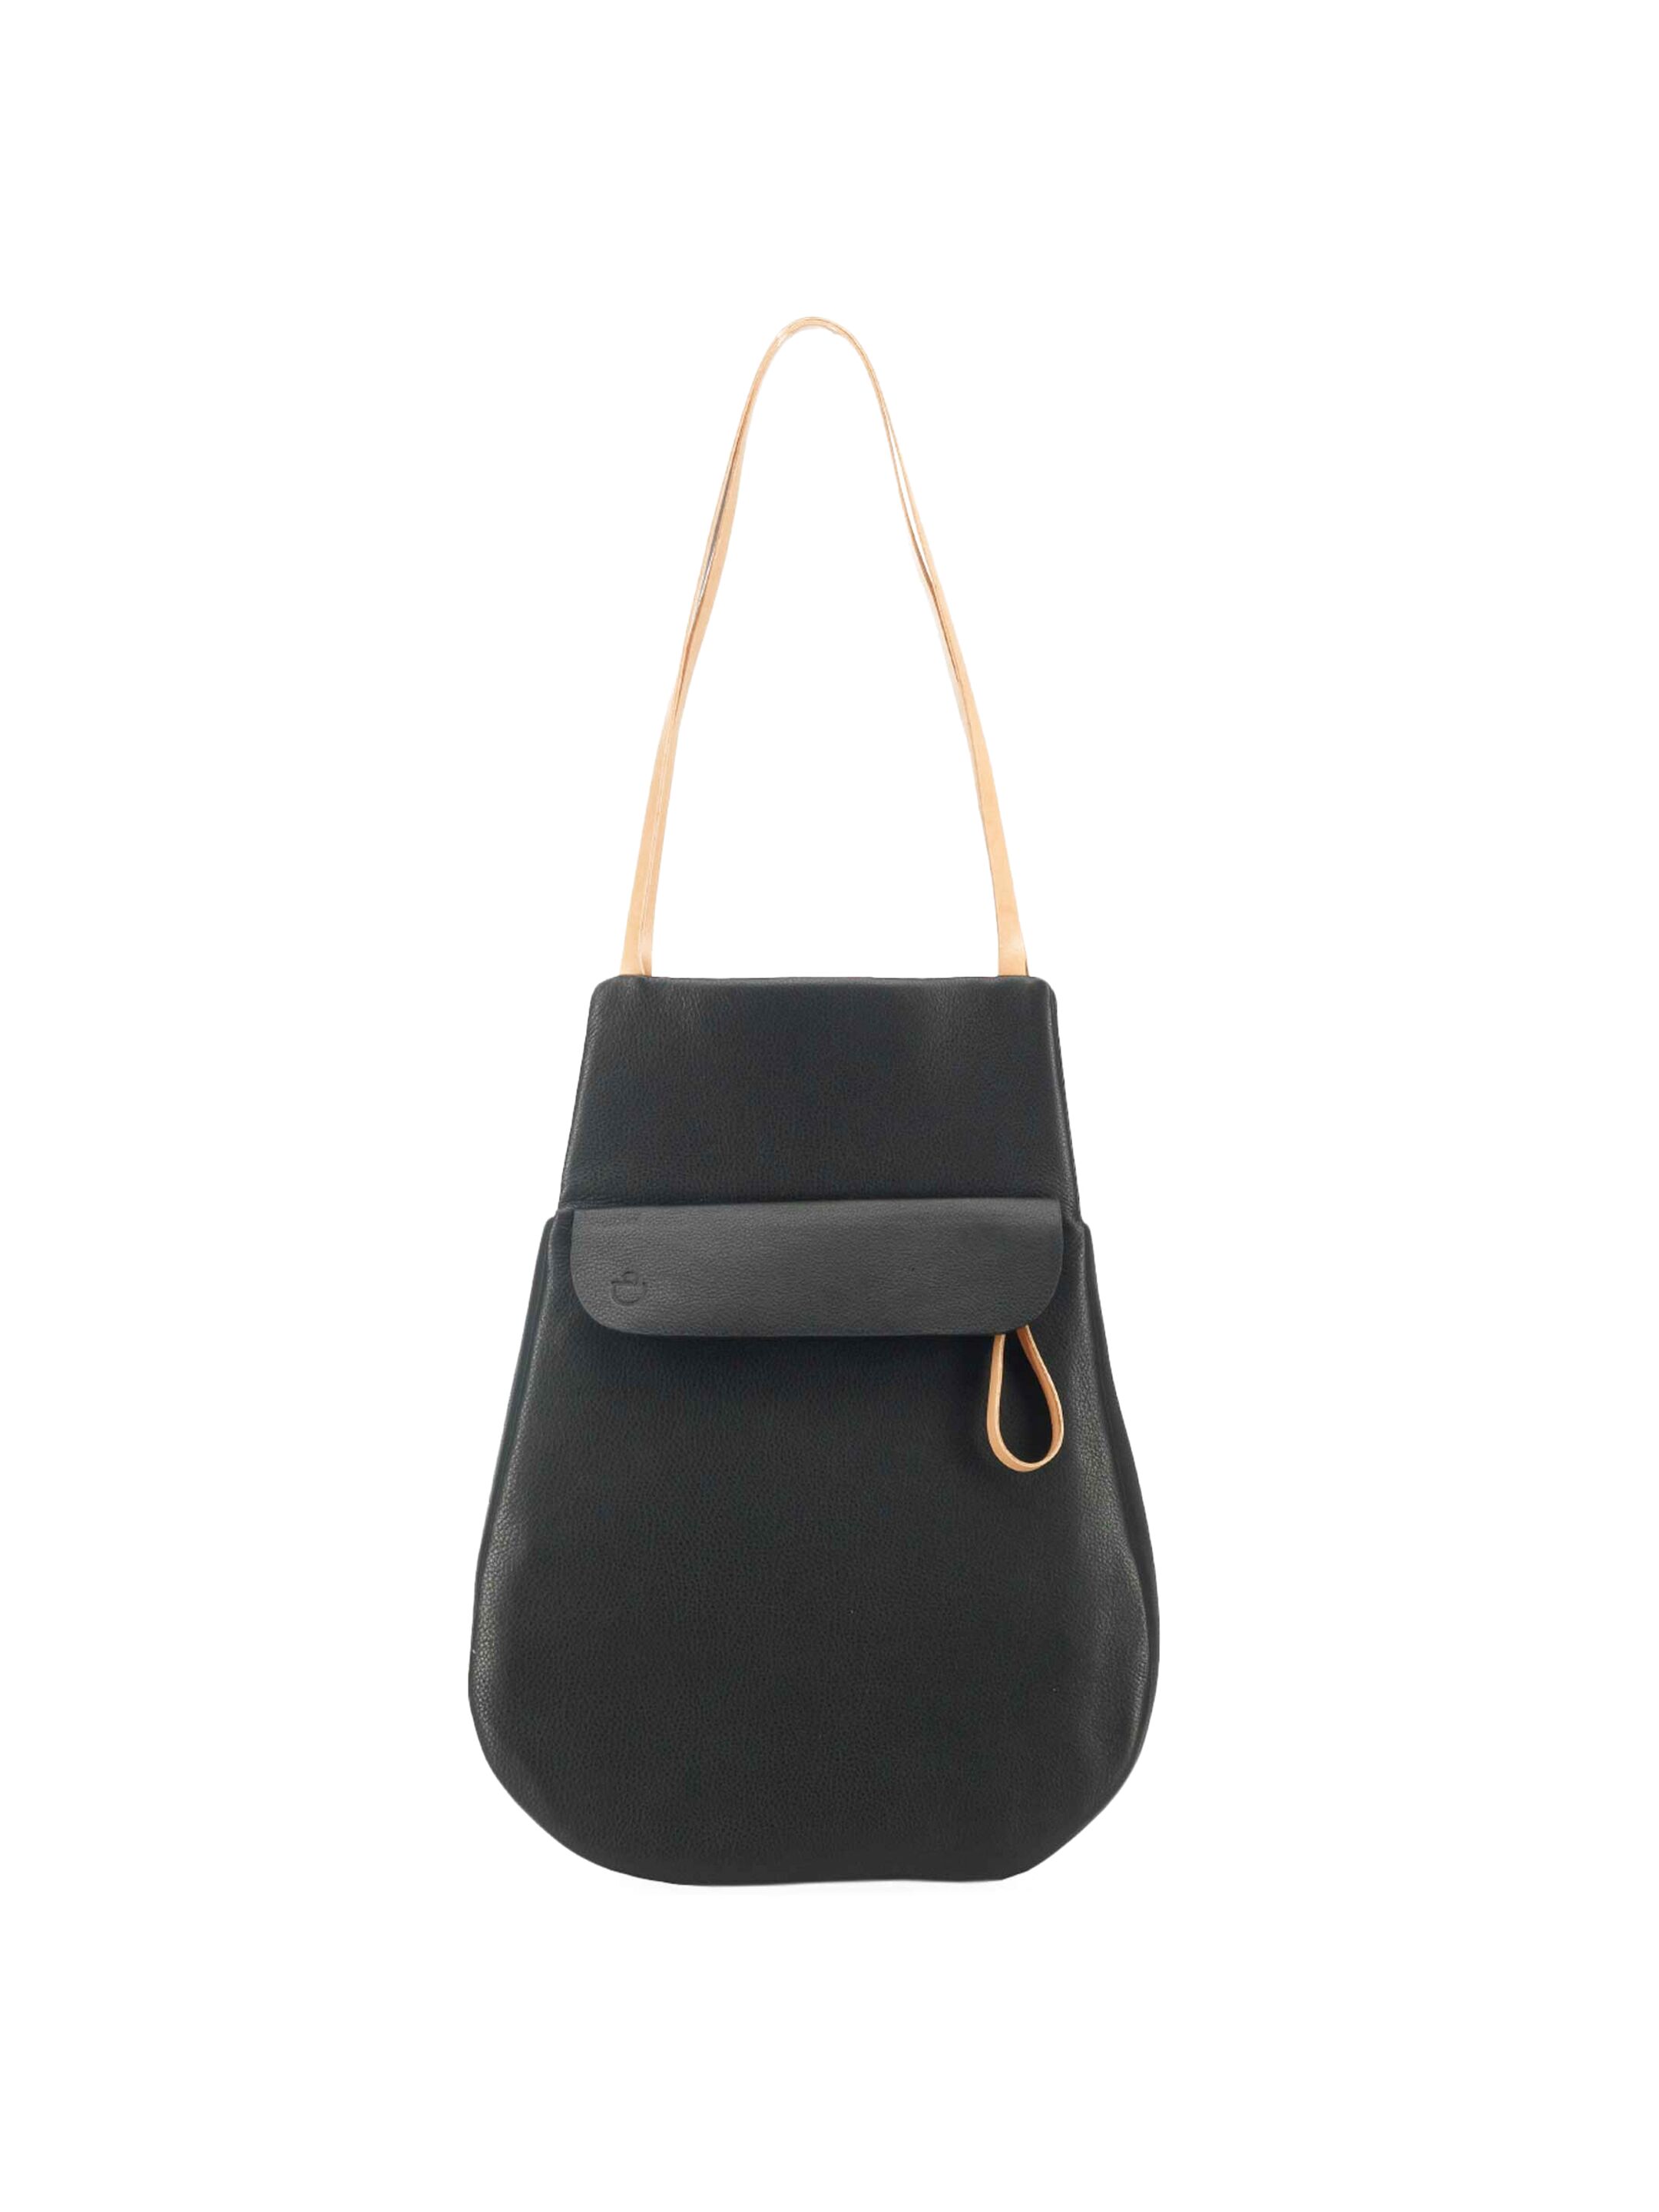 Pia Handbag for sale in UK | 21 second-hand Pia Handbags